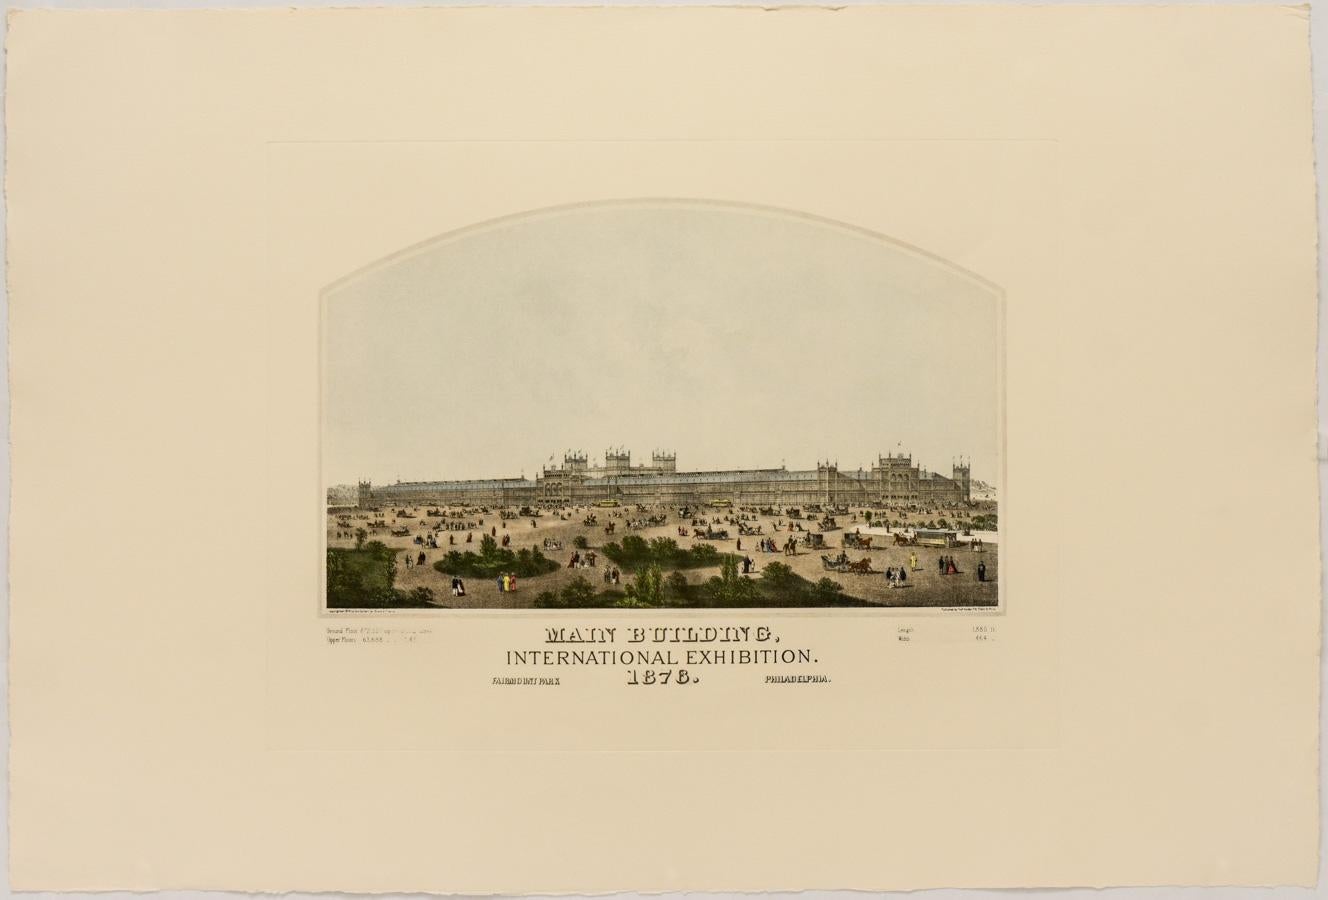 Louis Aubrun Print - Main Building, International Exhibition. Fairmount Park, Philadelphia. 1876.